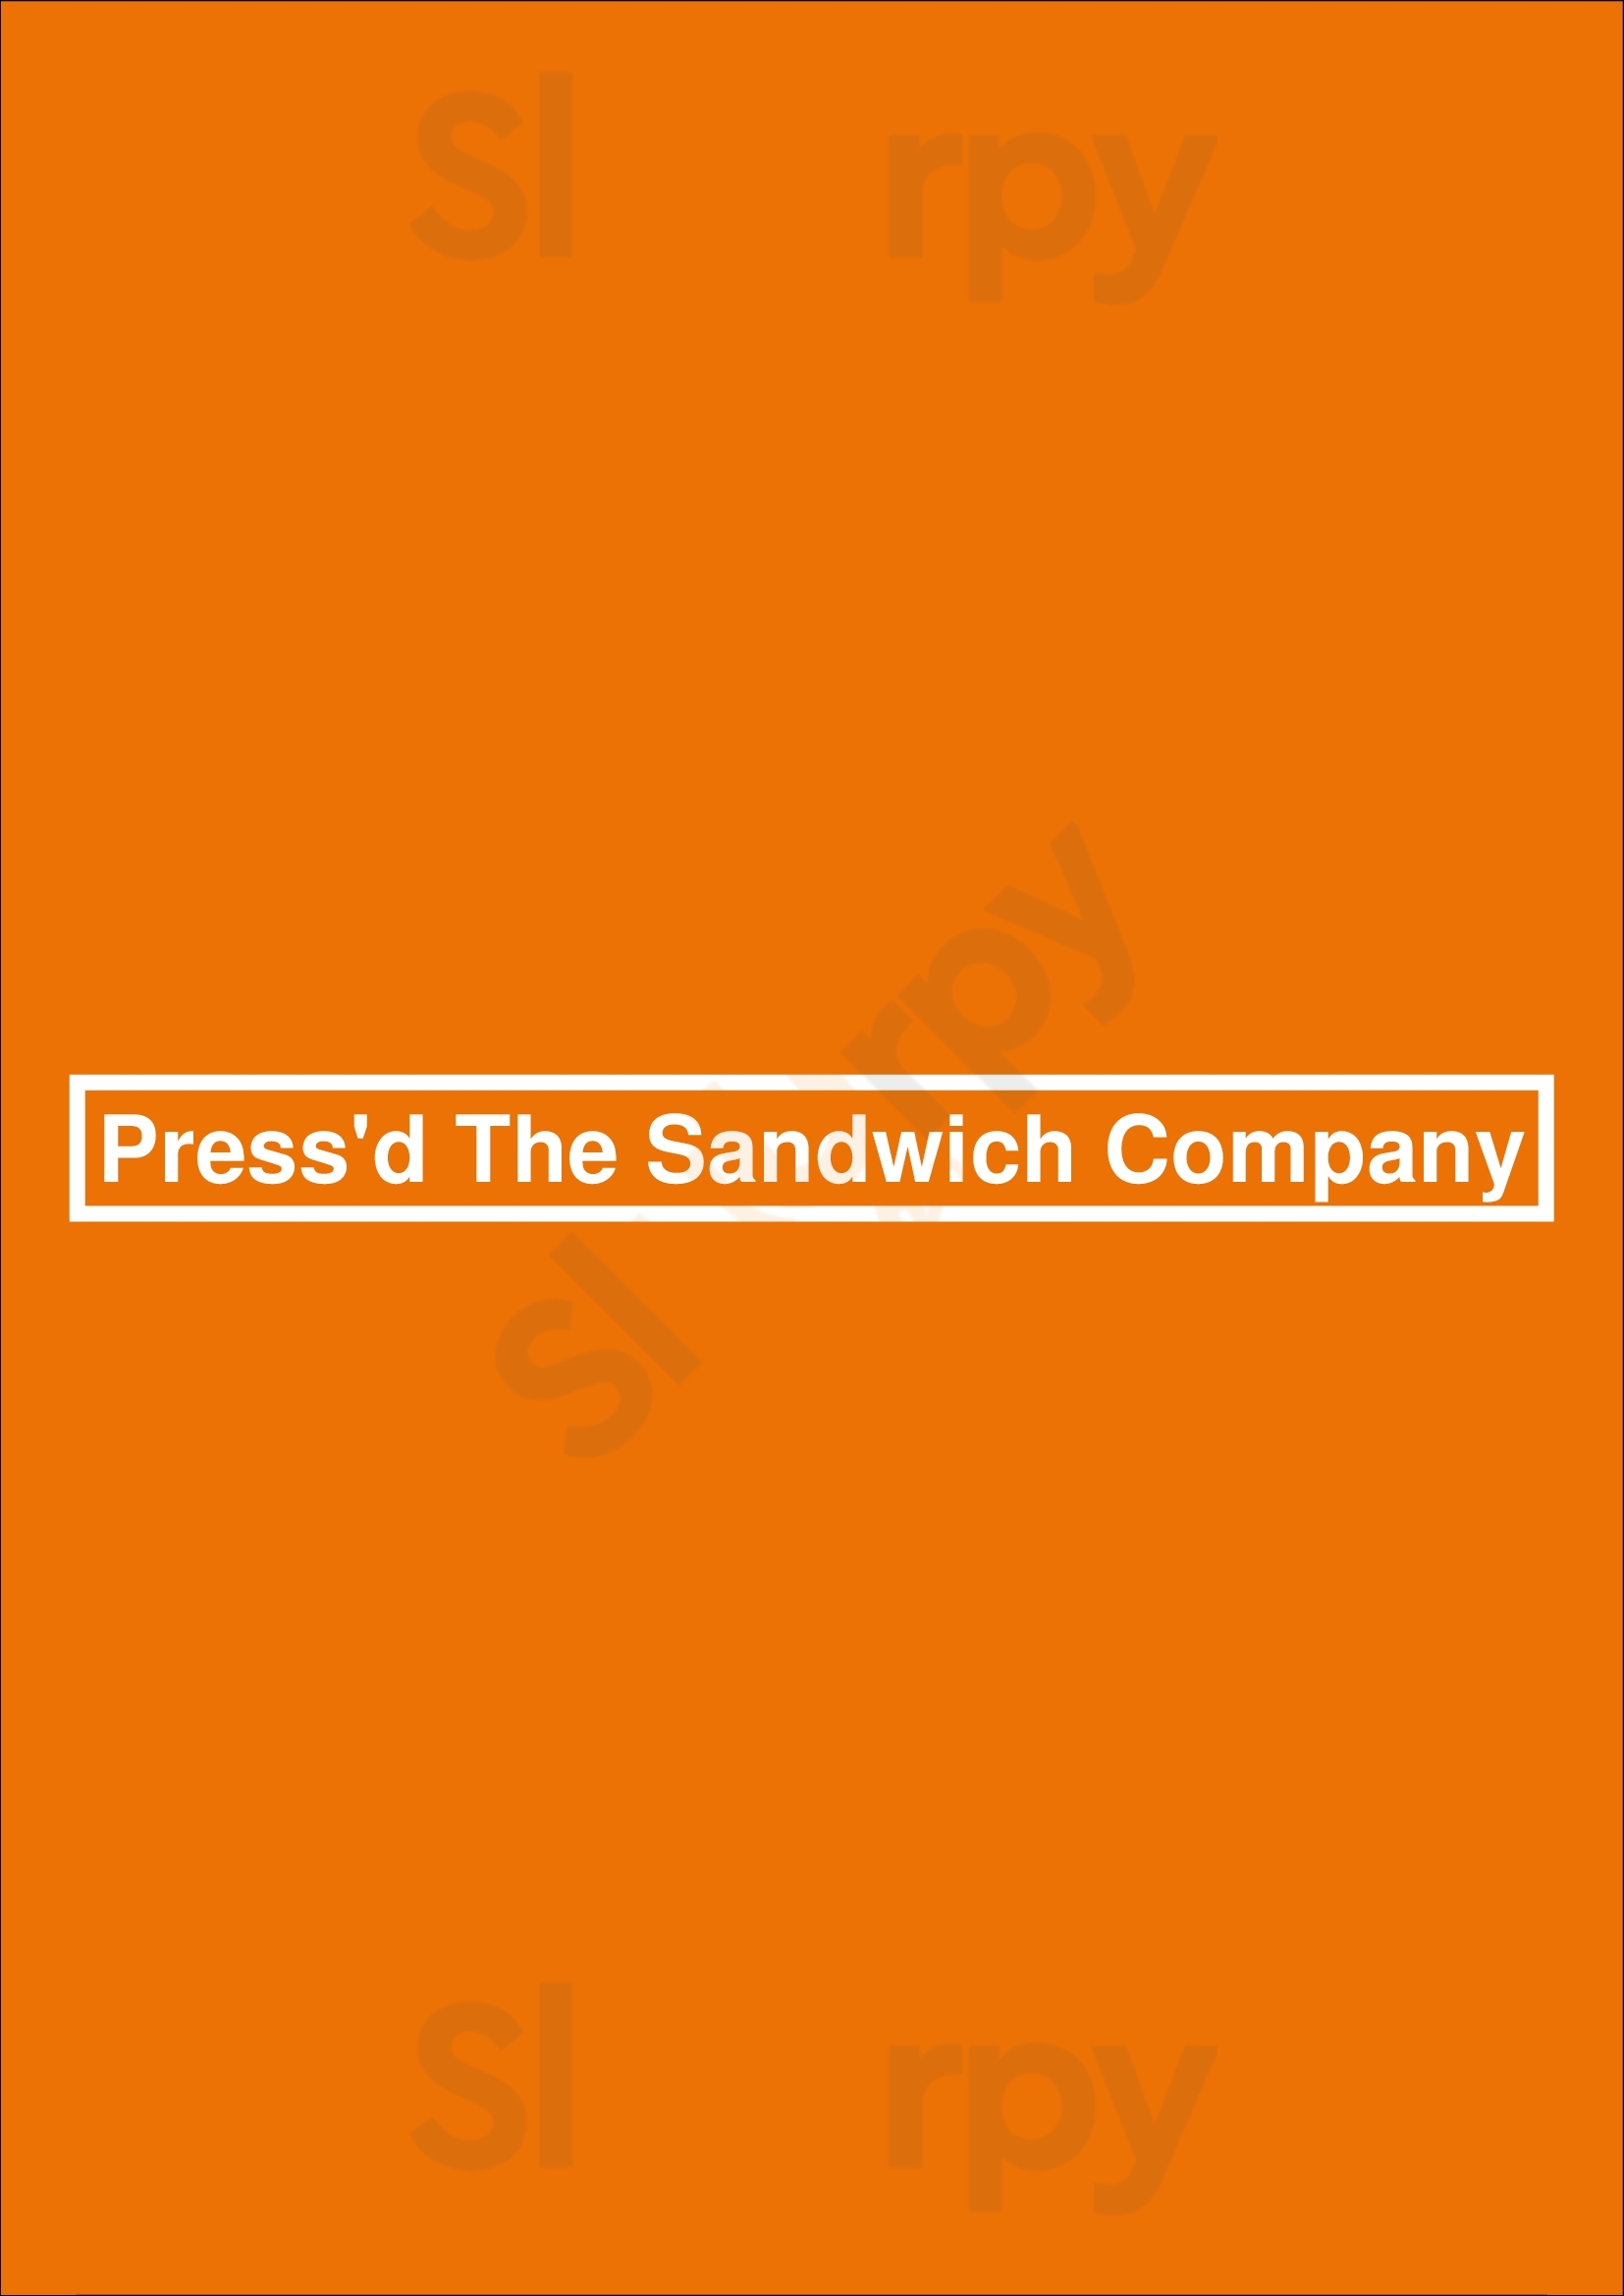 Press'd The Sandwich Company Sherwood Park Menu - 1